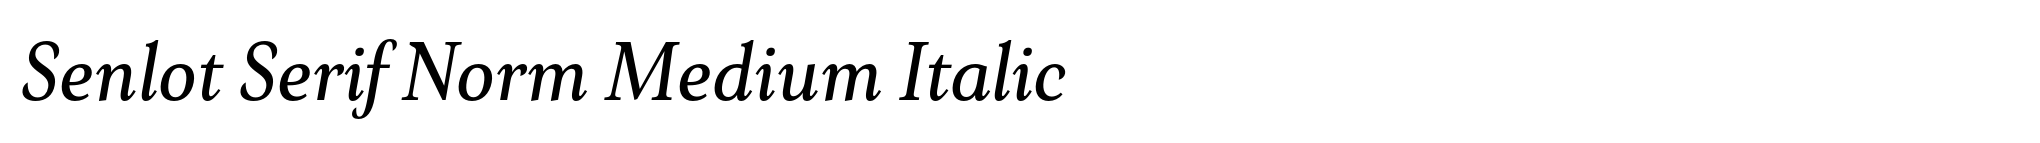 Senlot Serif Norm Medium Italic image